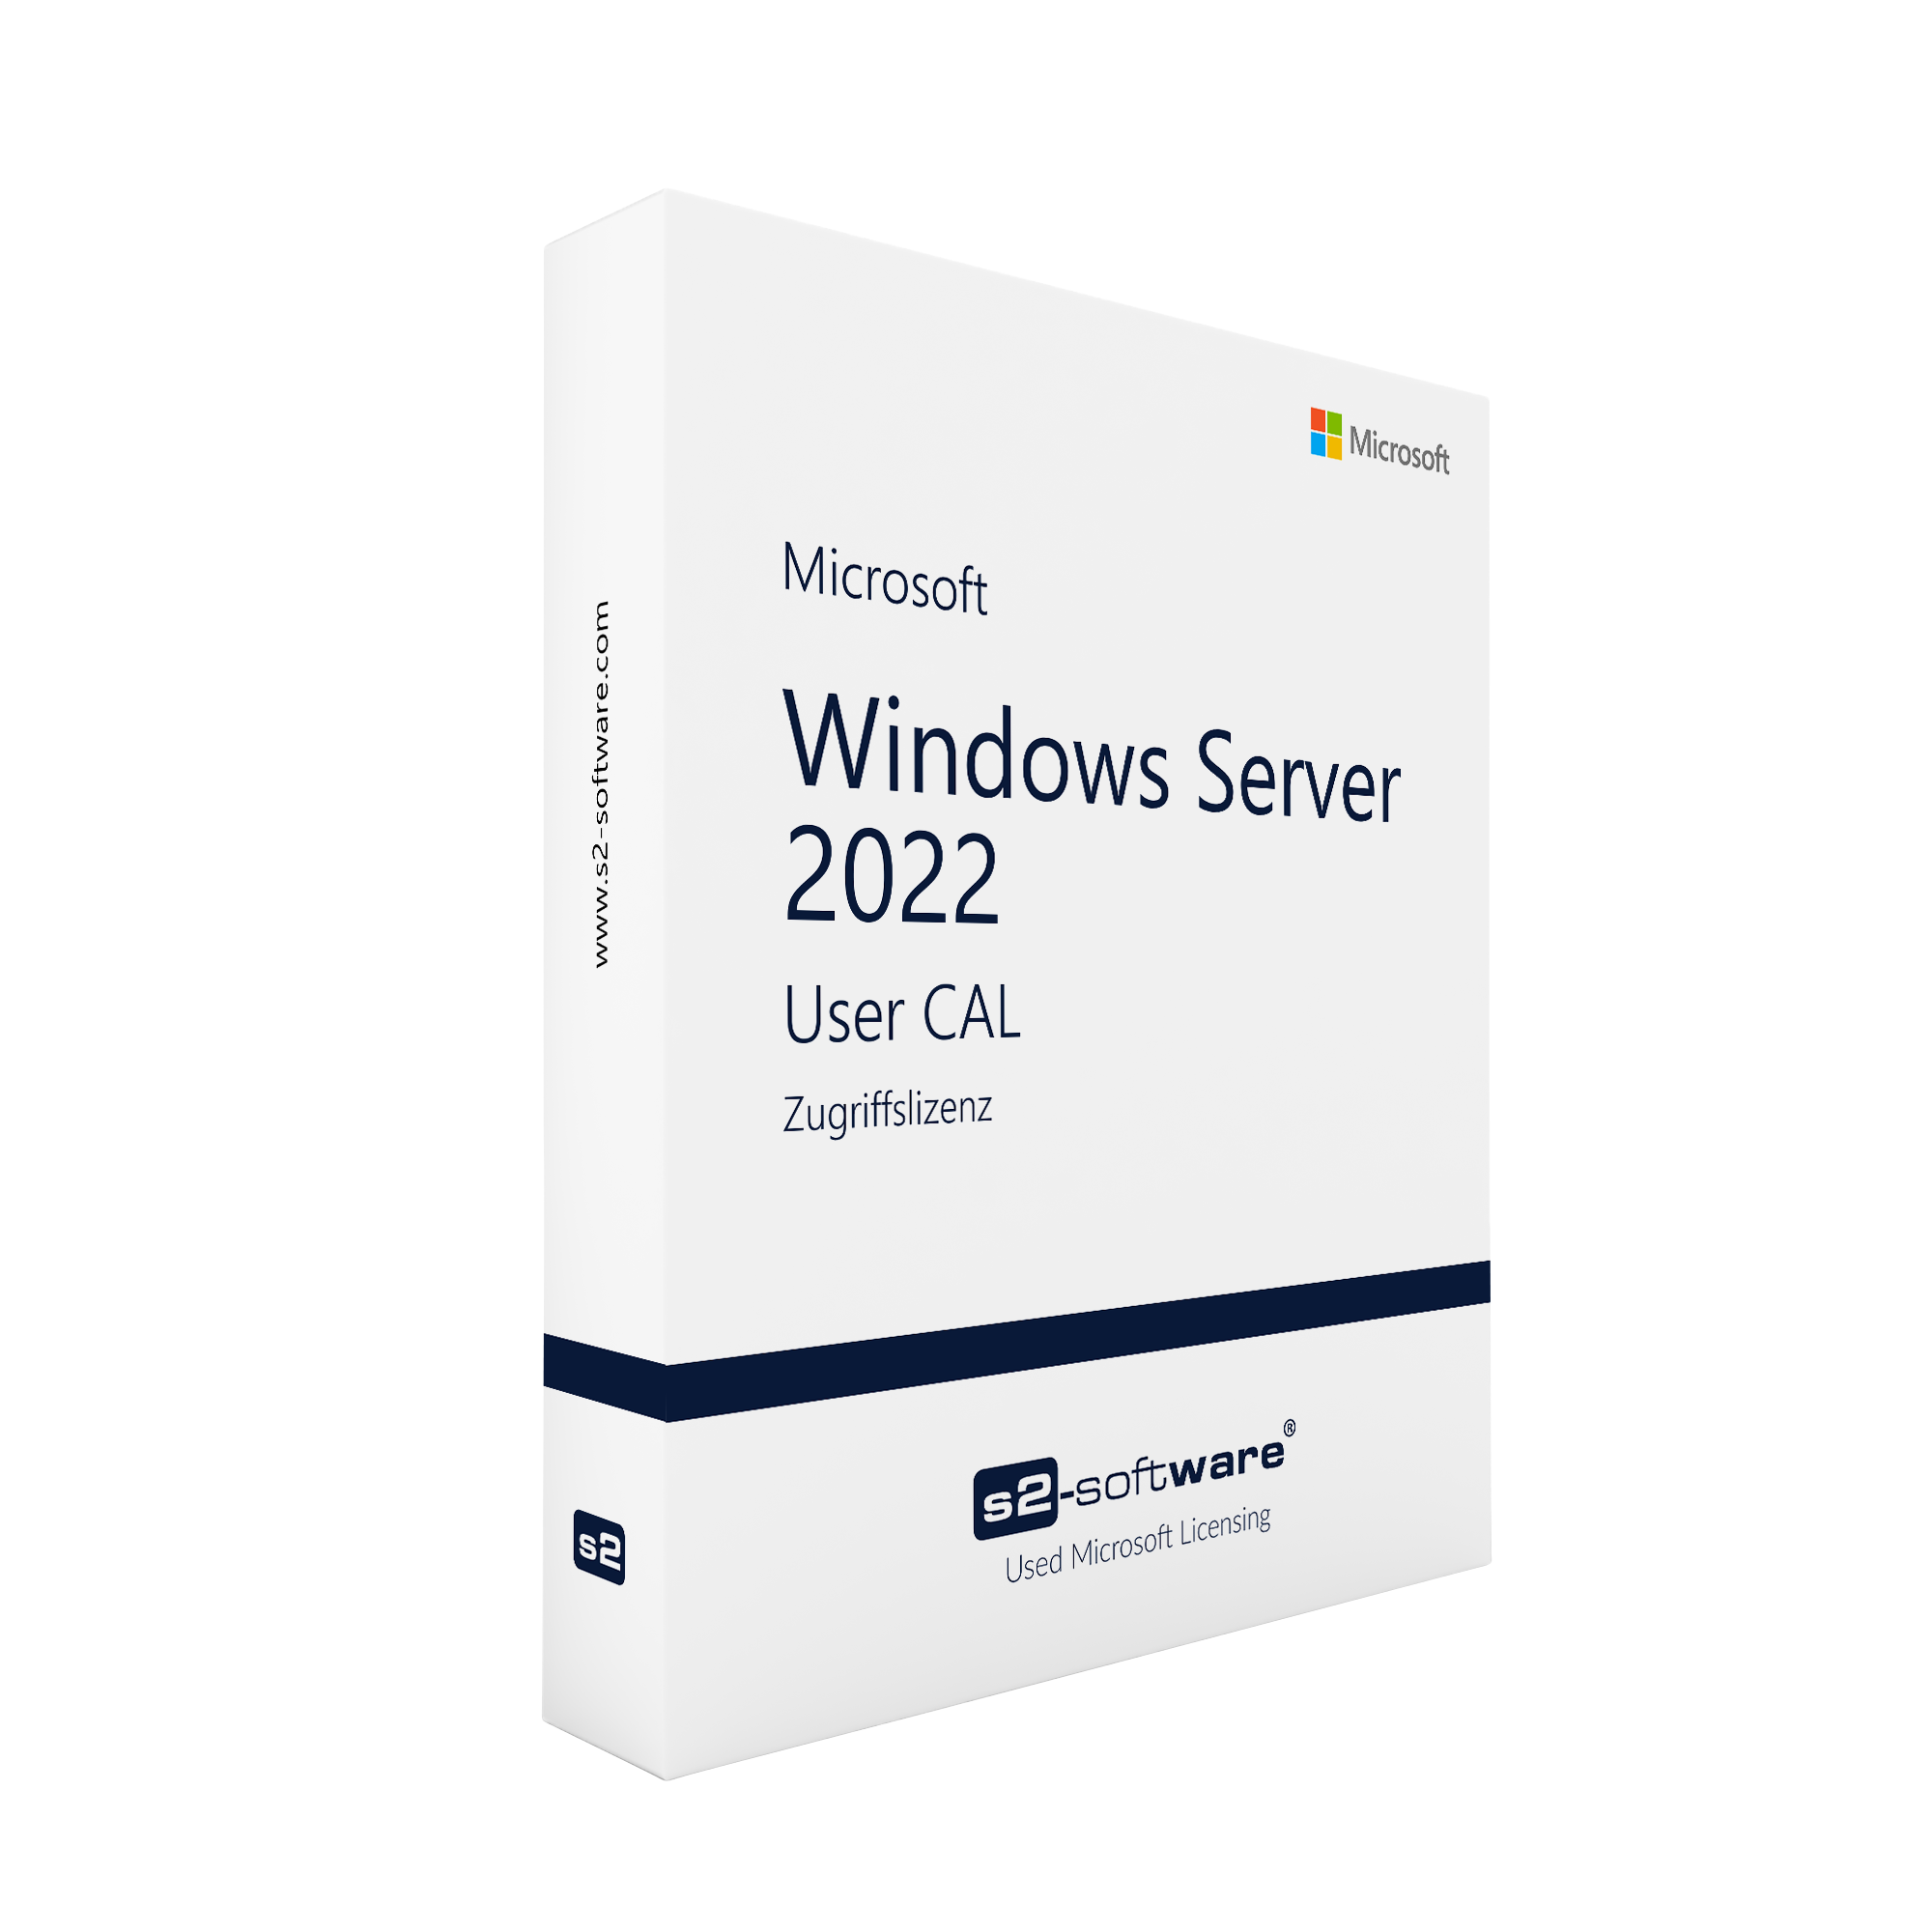 Windows Server 2022 User CAL